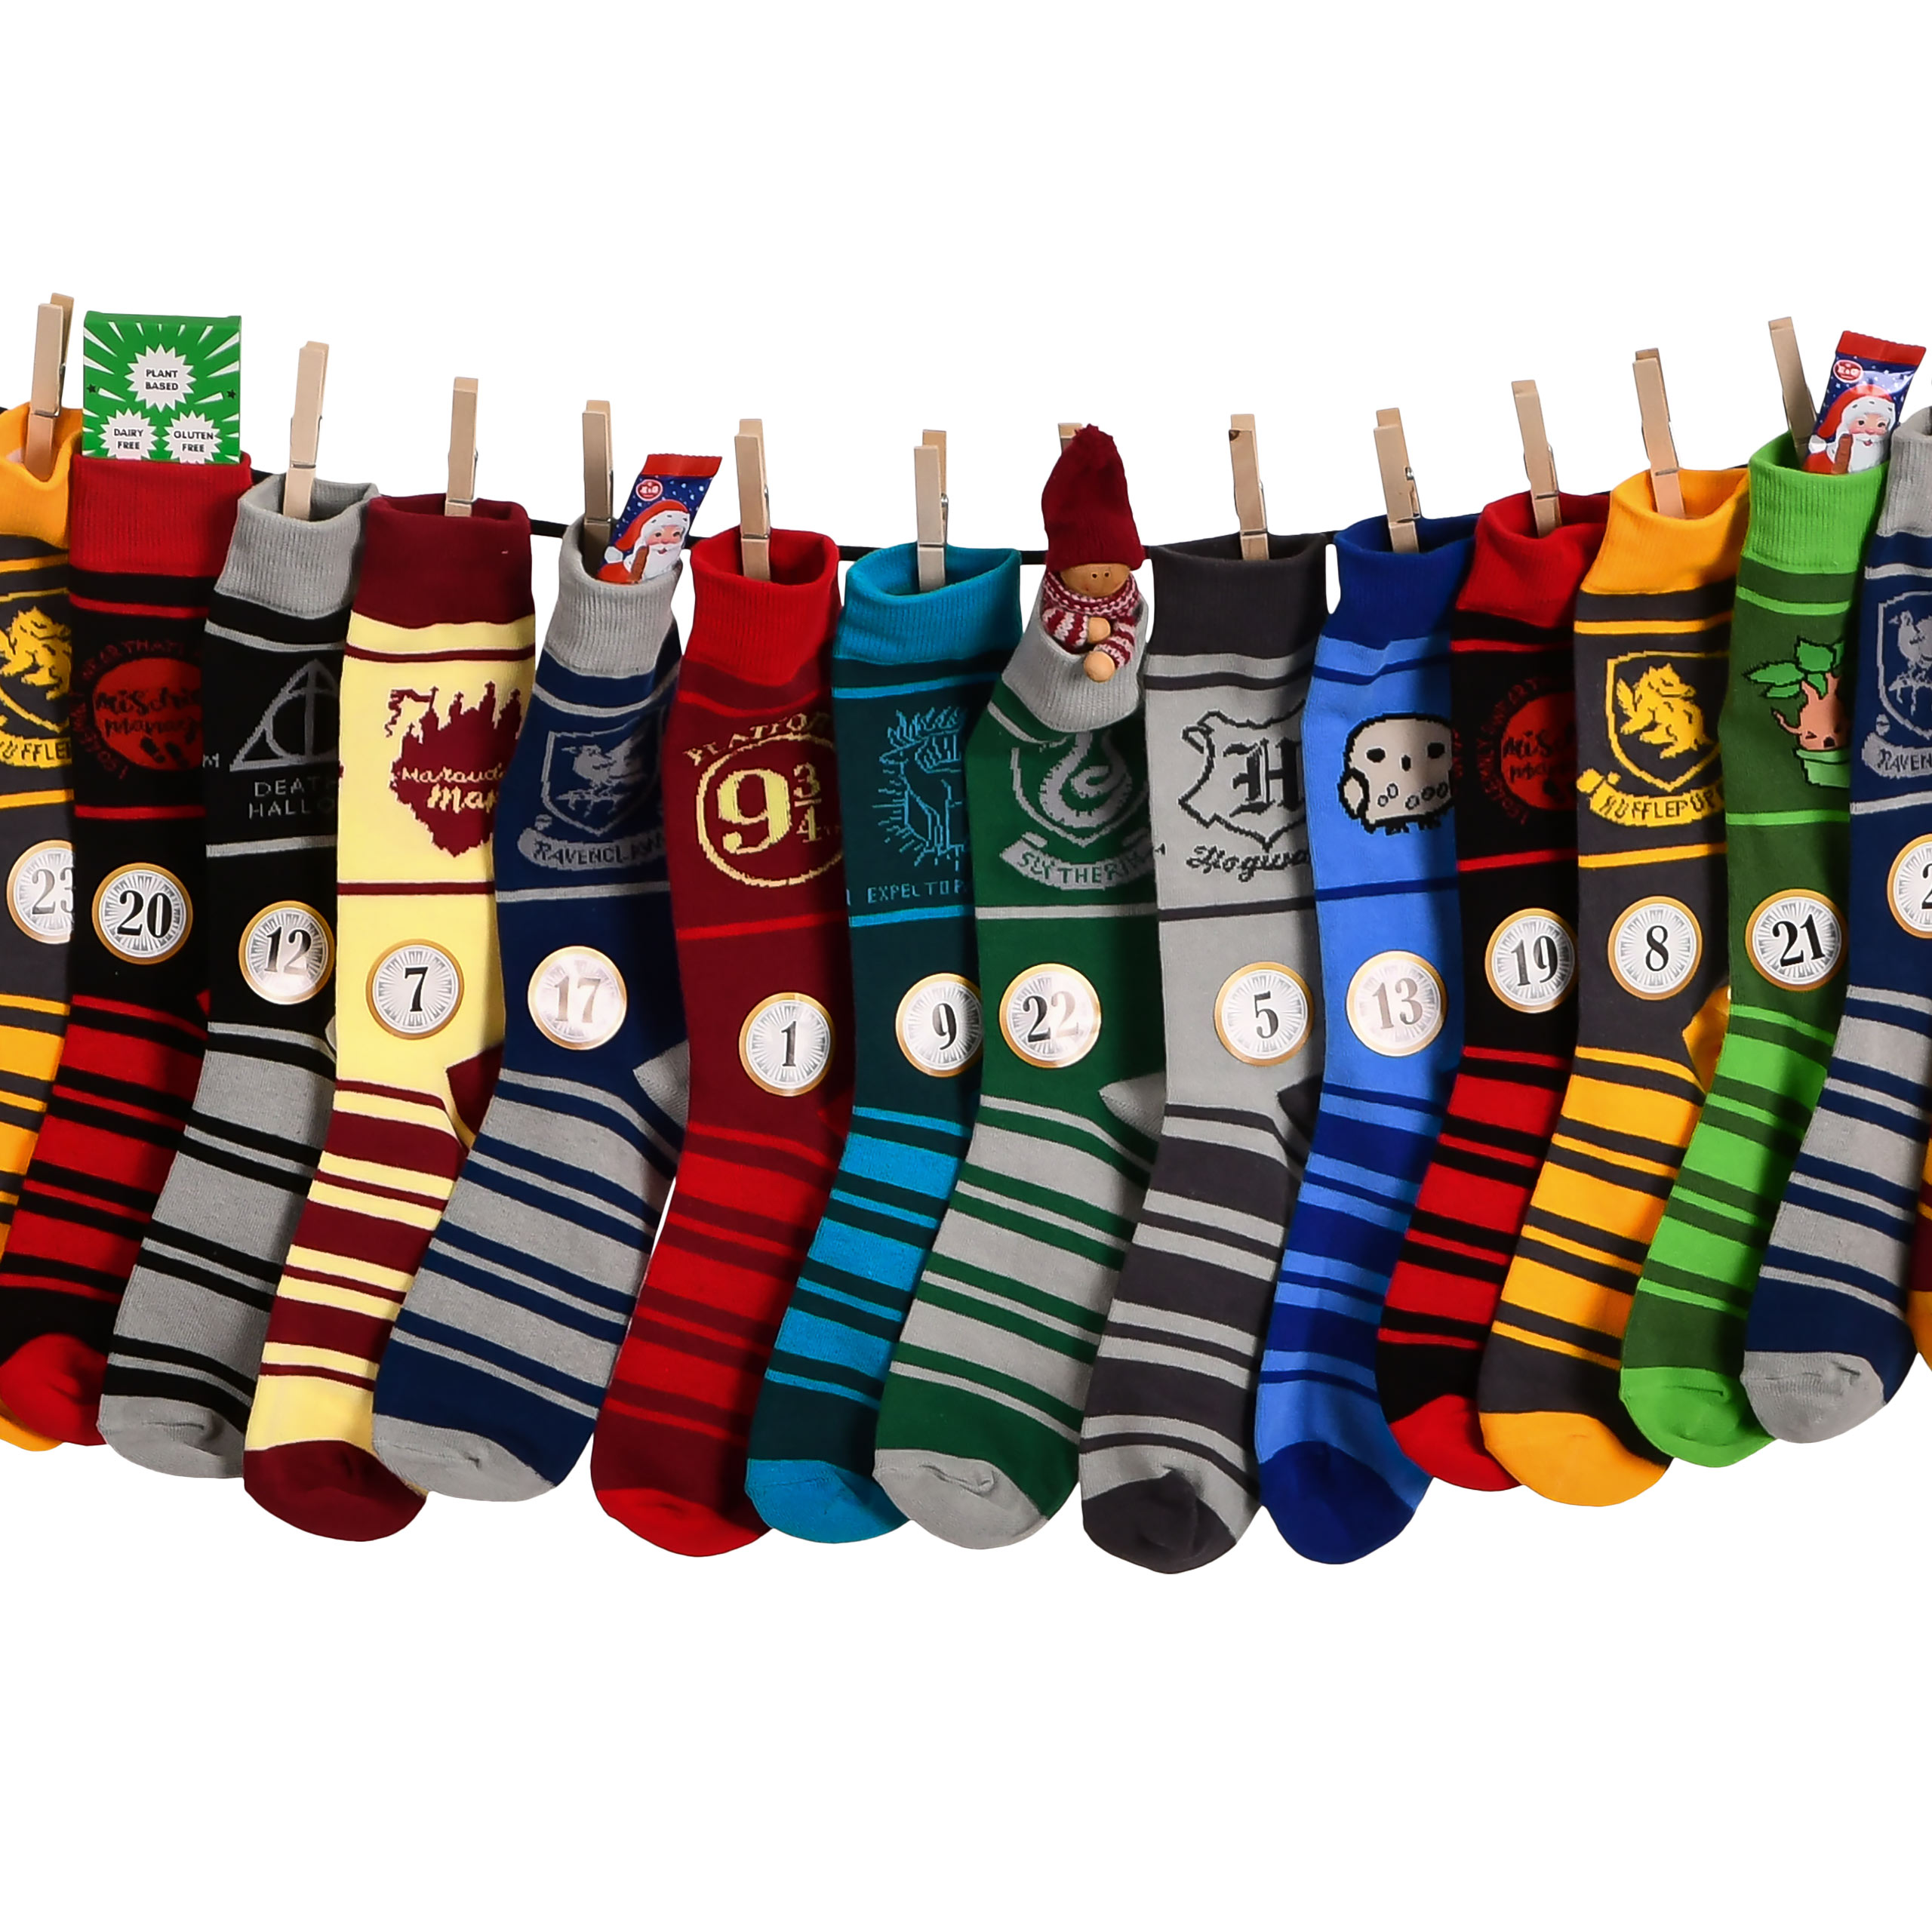 Advent Calendar Harry Potter Socks Tips For Original Gifts, 40% OFF